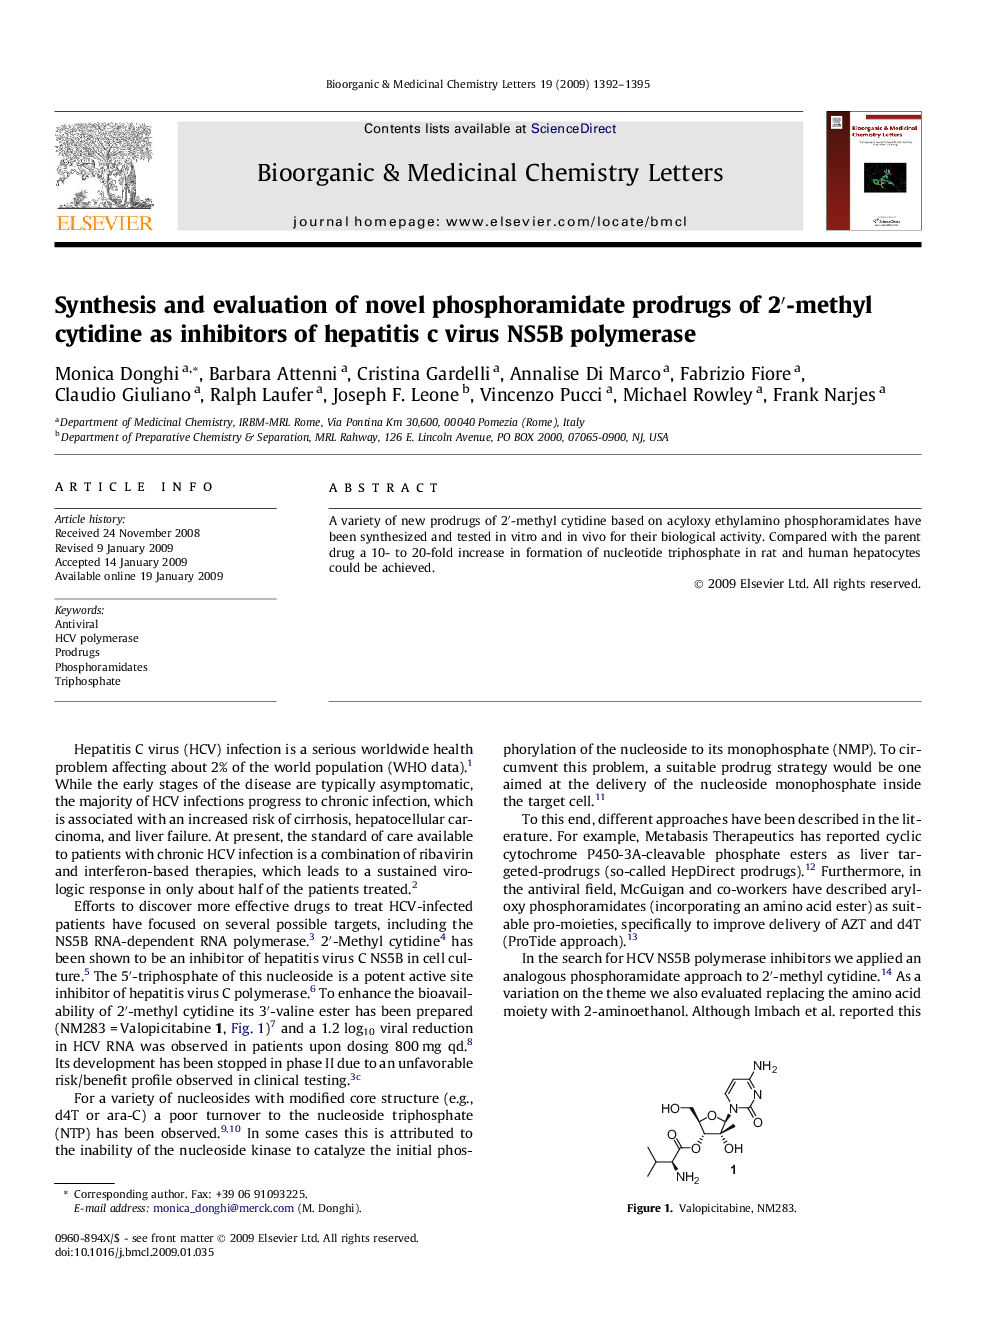 Synthesis and evaluation of novel phosphoramidate prodrugs of 2′-methyl cytidine as inhibitors of hepatitis c virus NS5B polymerase